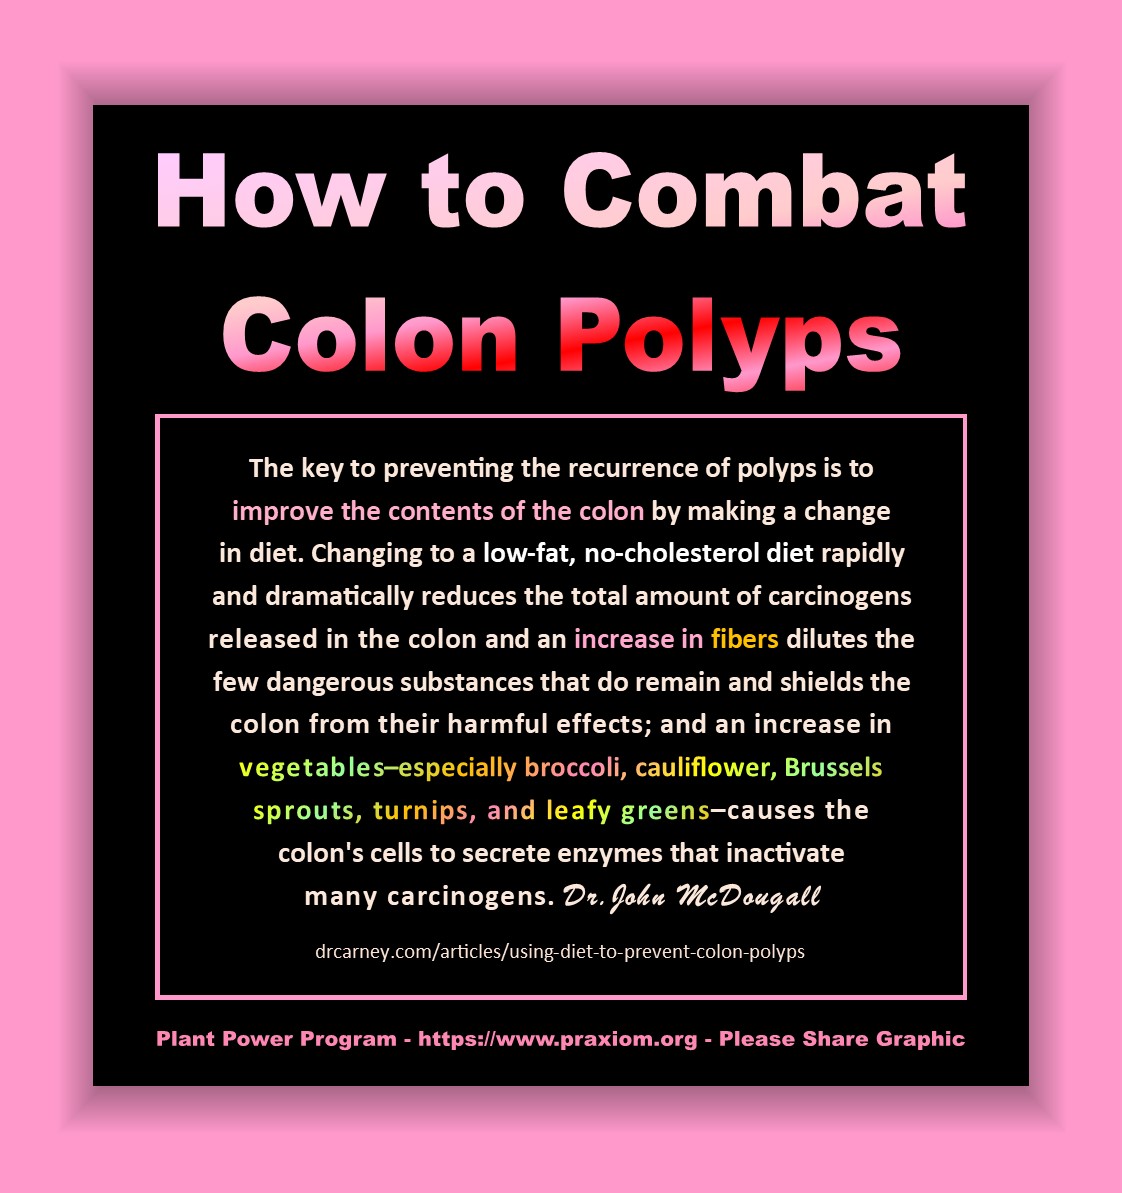 How to Combat Colon Polyps - Dr. John McDougall